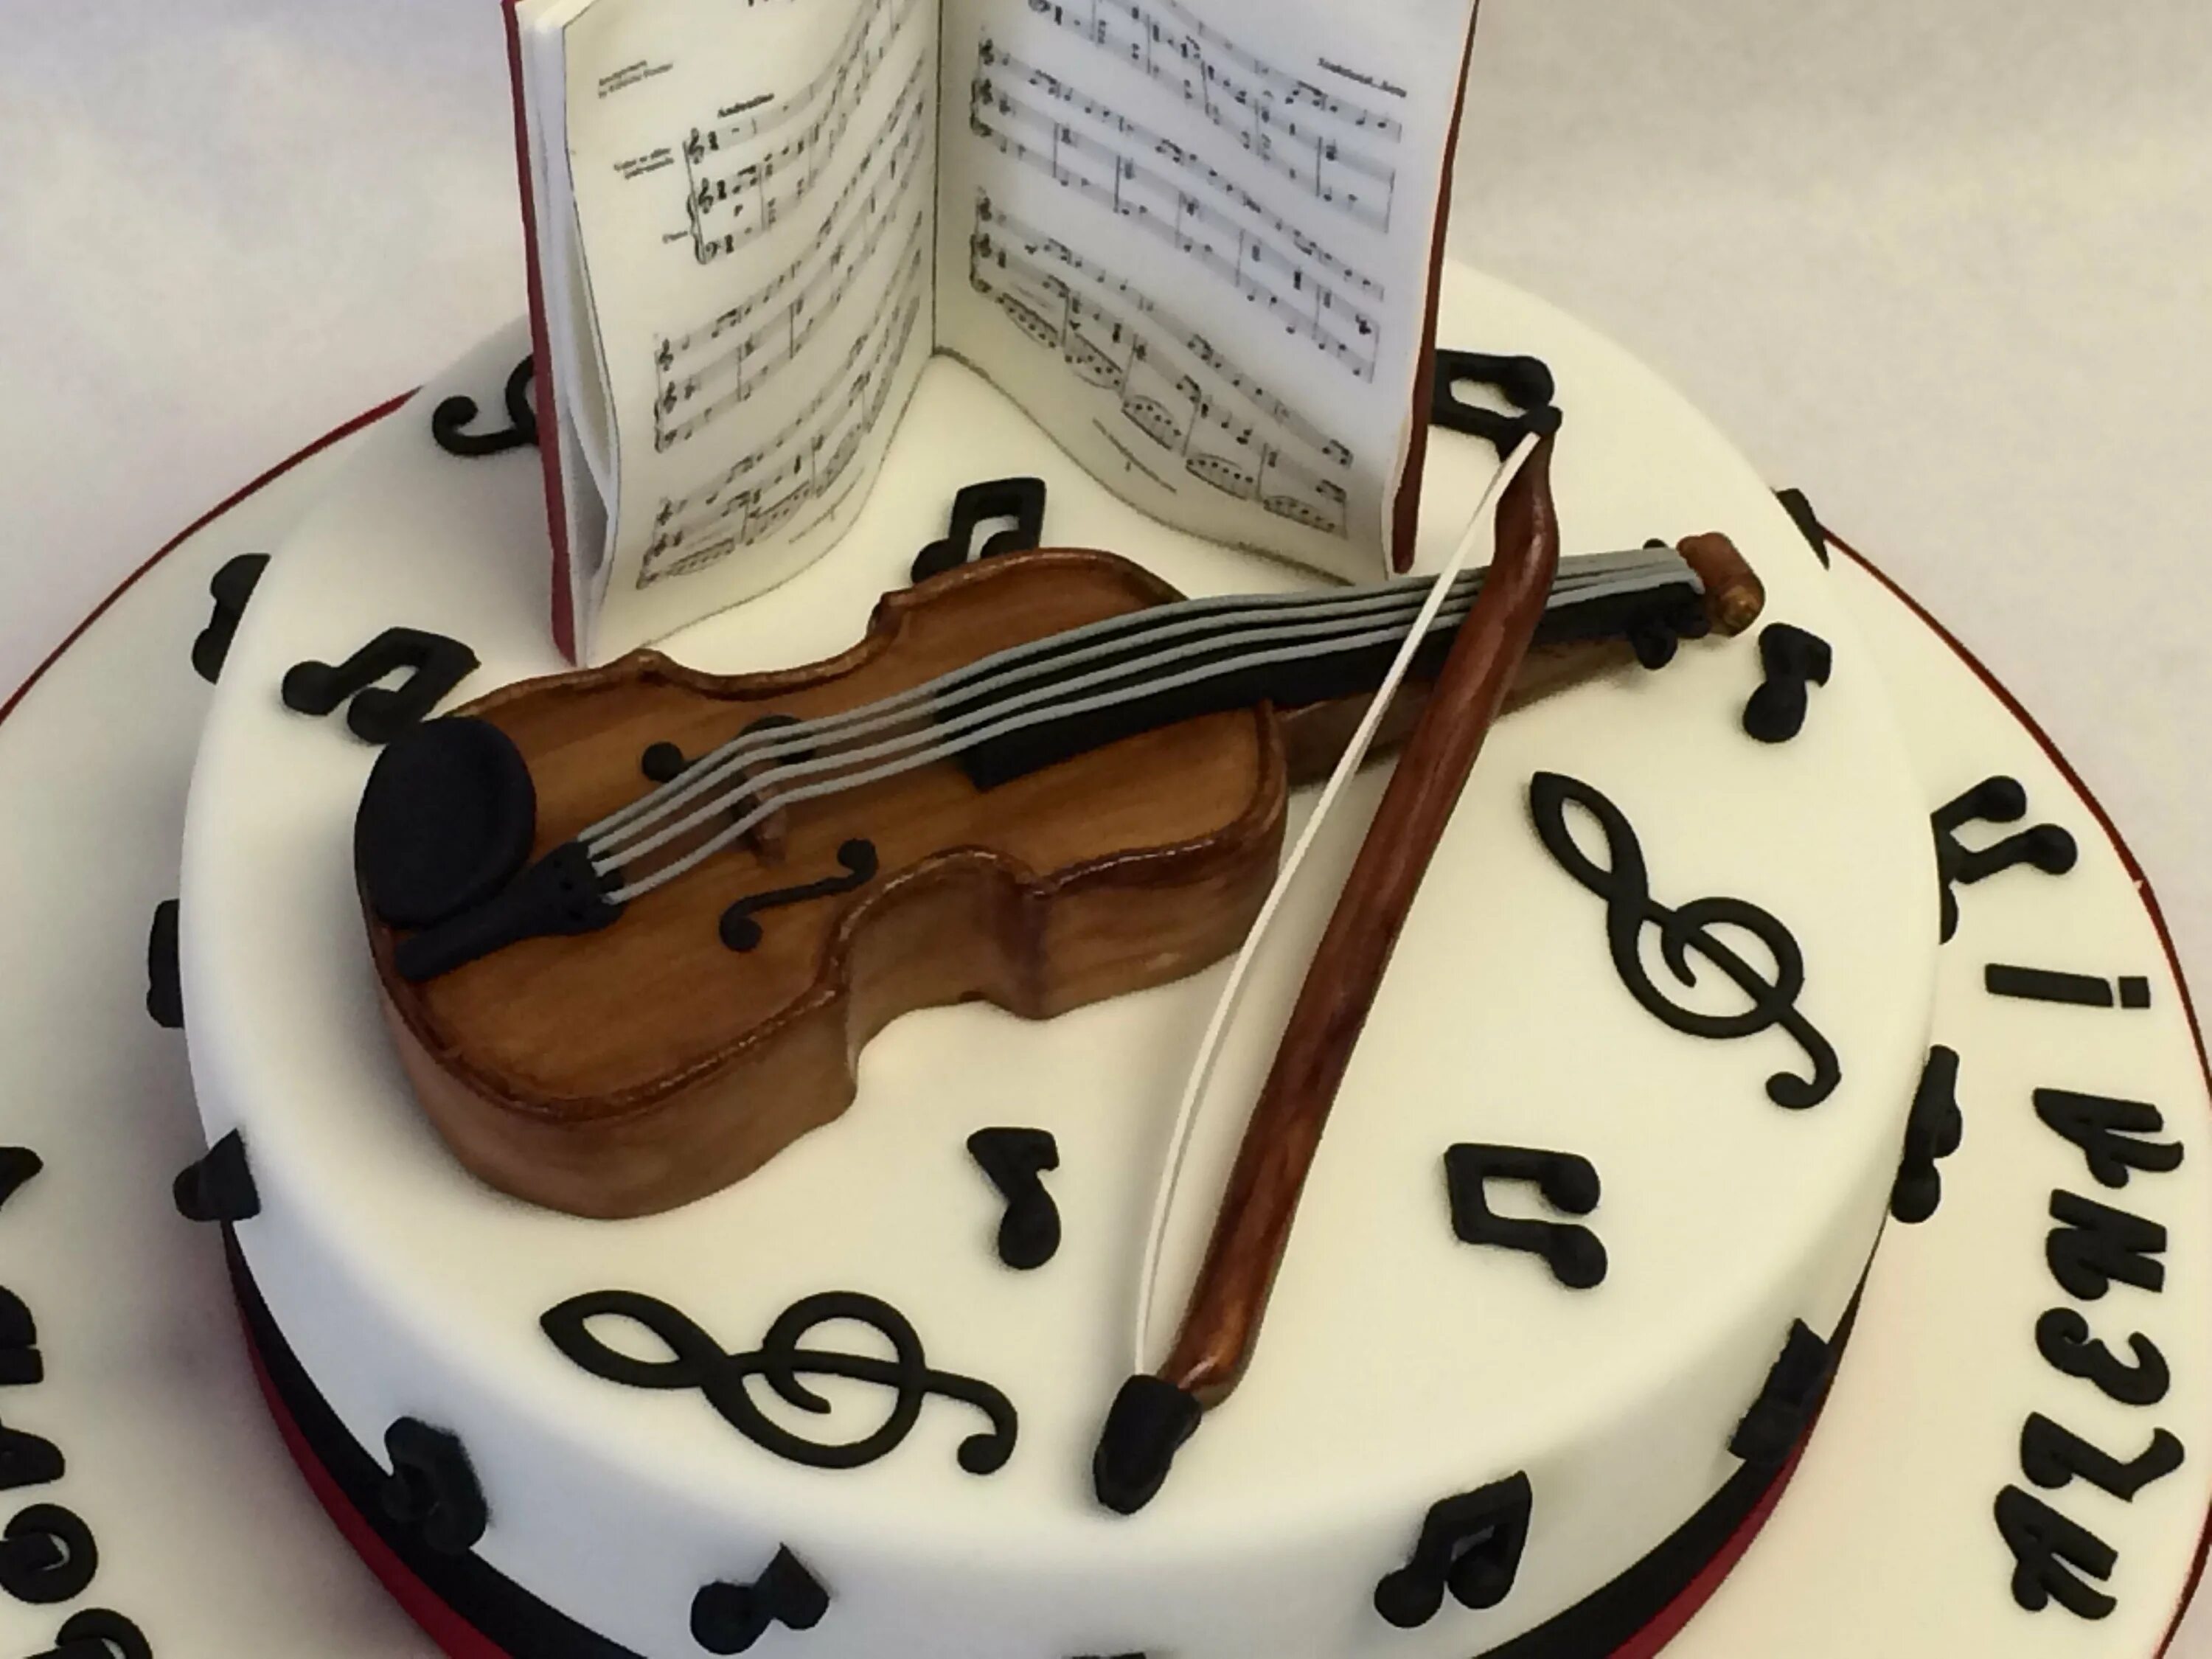 С днем рождения мужчине музыкальное. С днём рождения мужчине музыканту. Торт для музыканта. Торт в музыкальном стиле. Торт в виде скрипки.